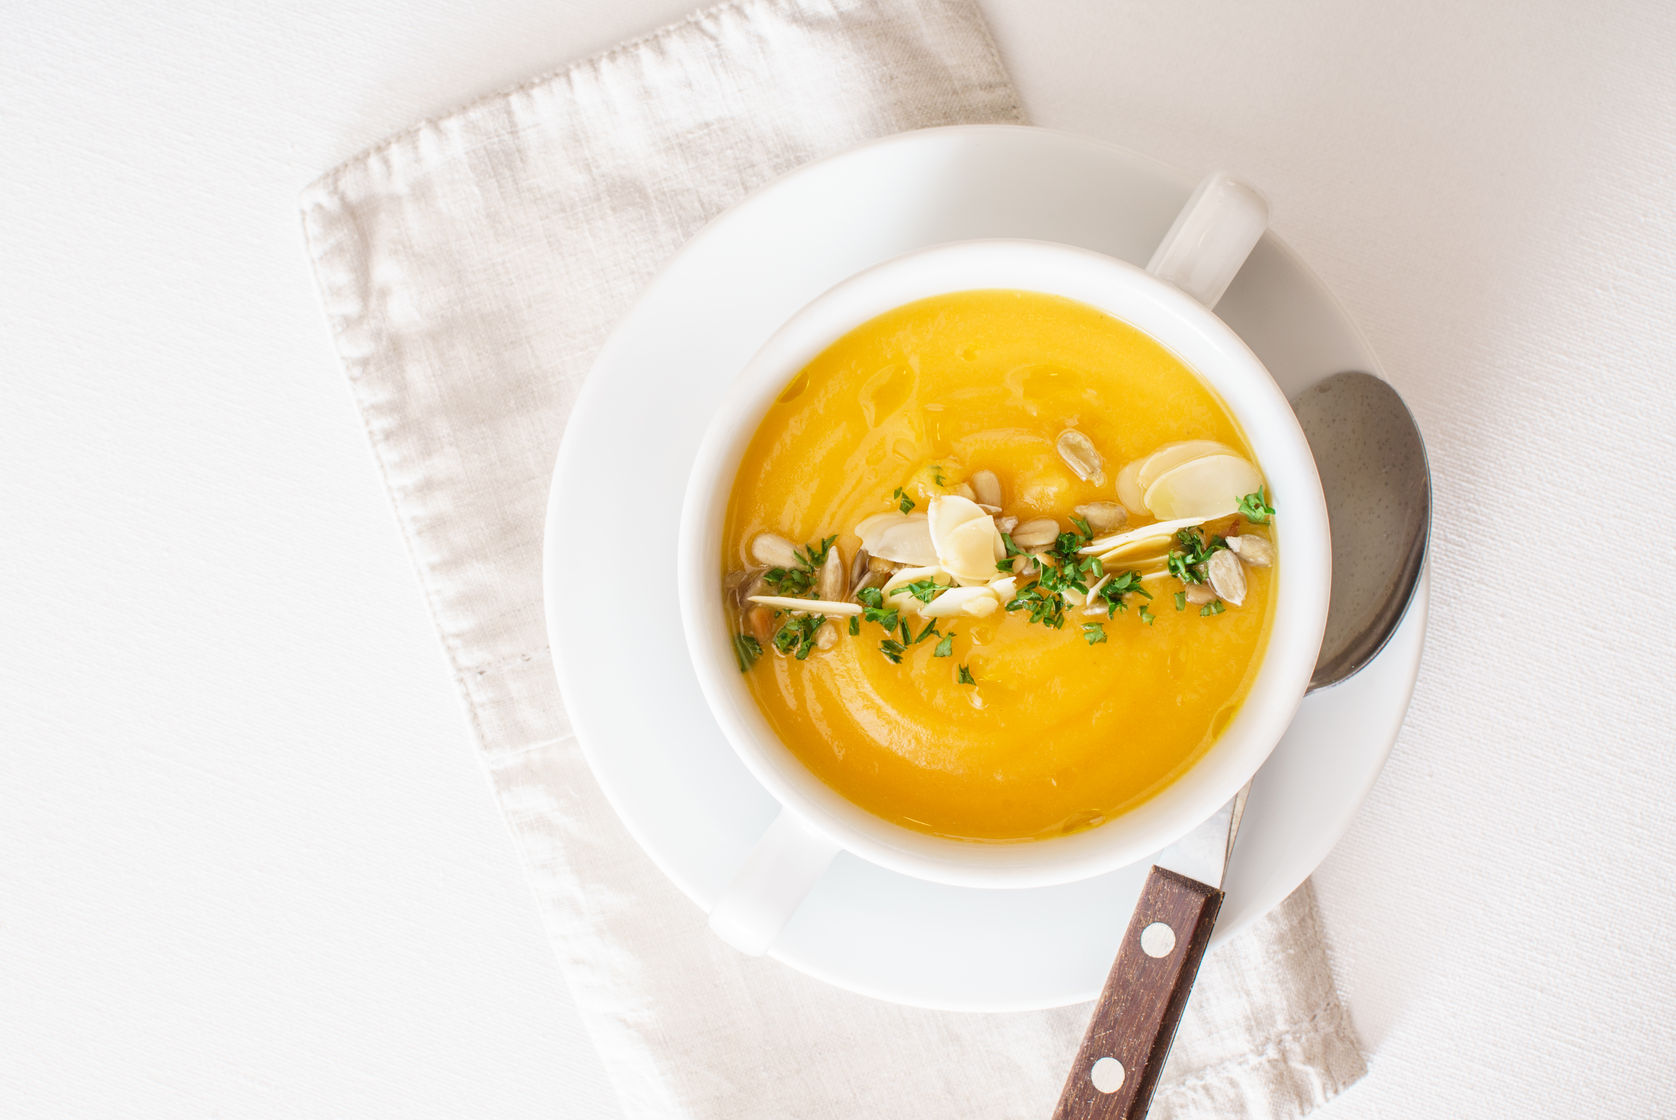 https://nutritiouslife.com/wp-content/uploads/2017/01/healthy-soup-recipes-1.jpg